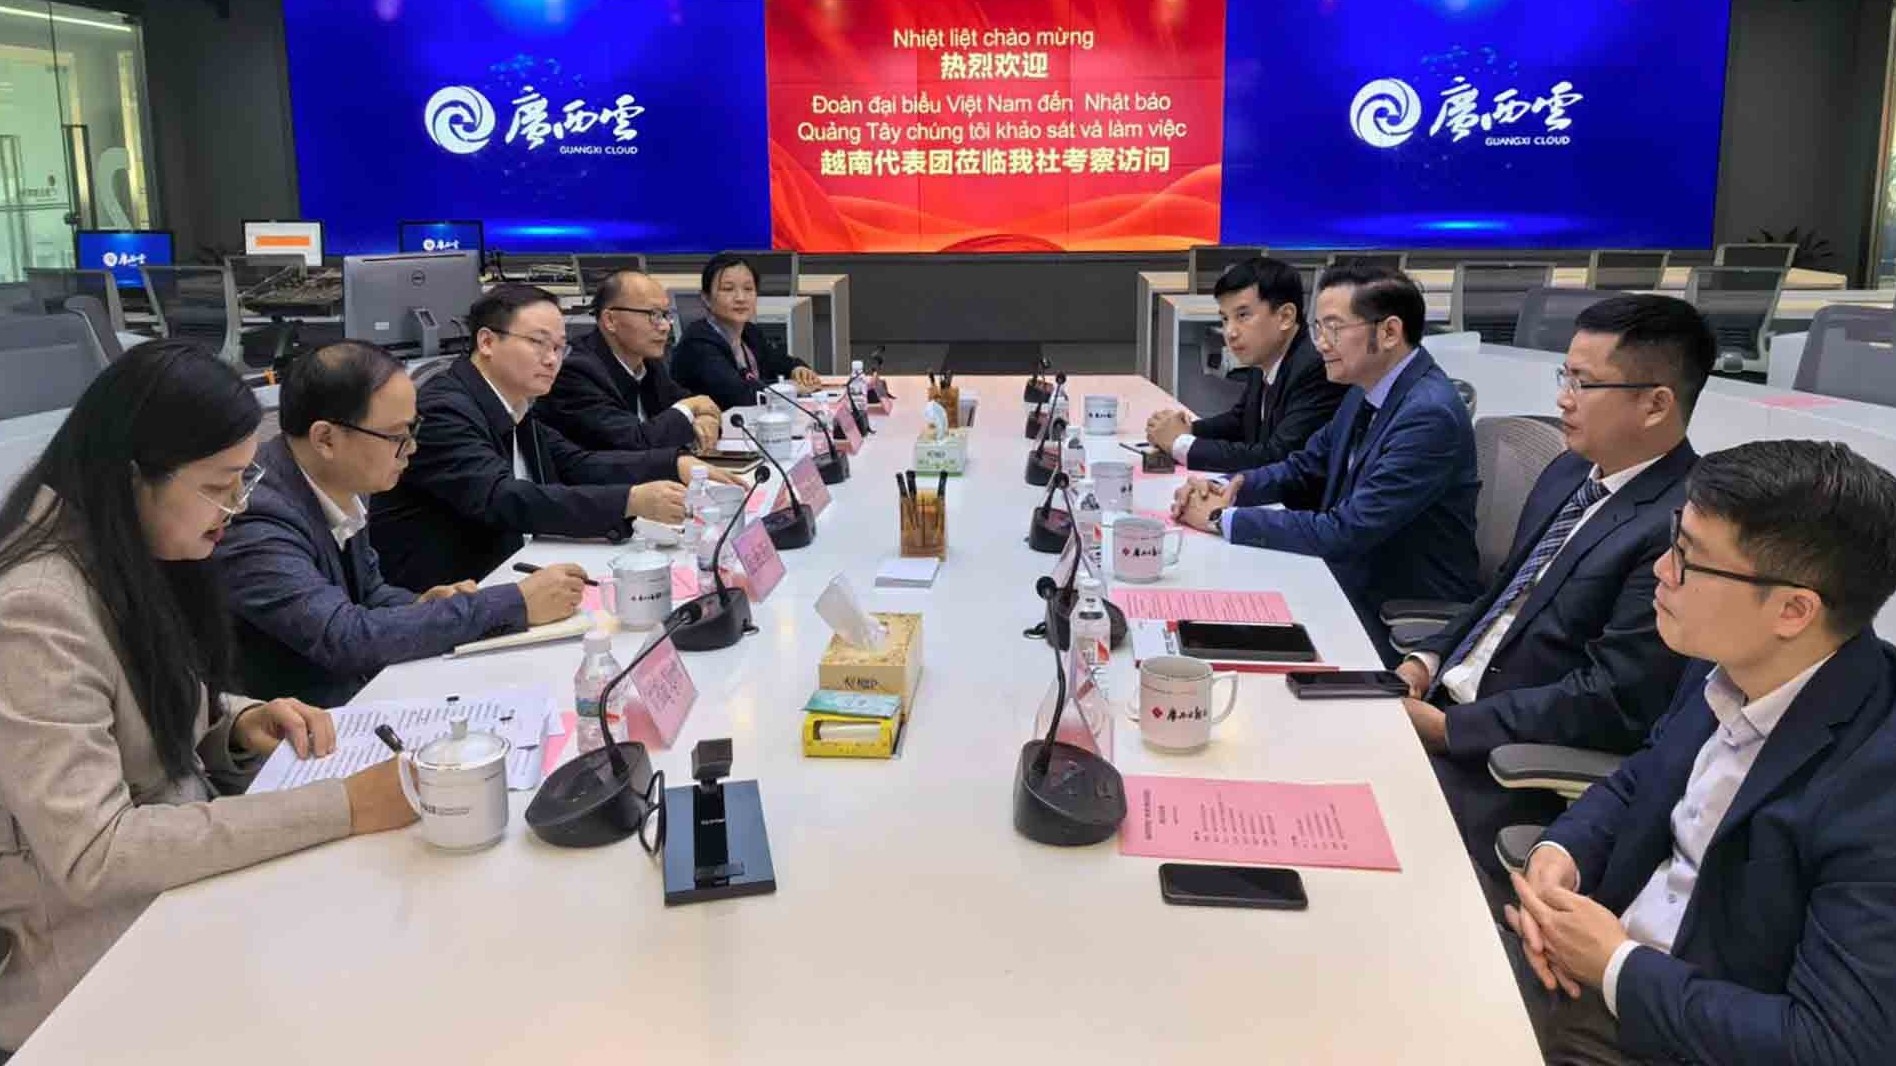 Enhancing press cooperation between Vietnam and China’s Guangxi